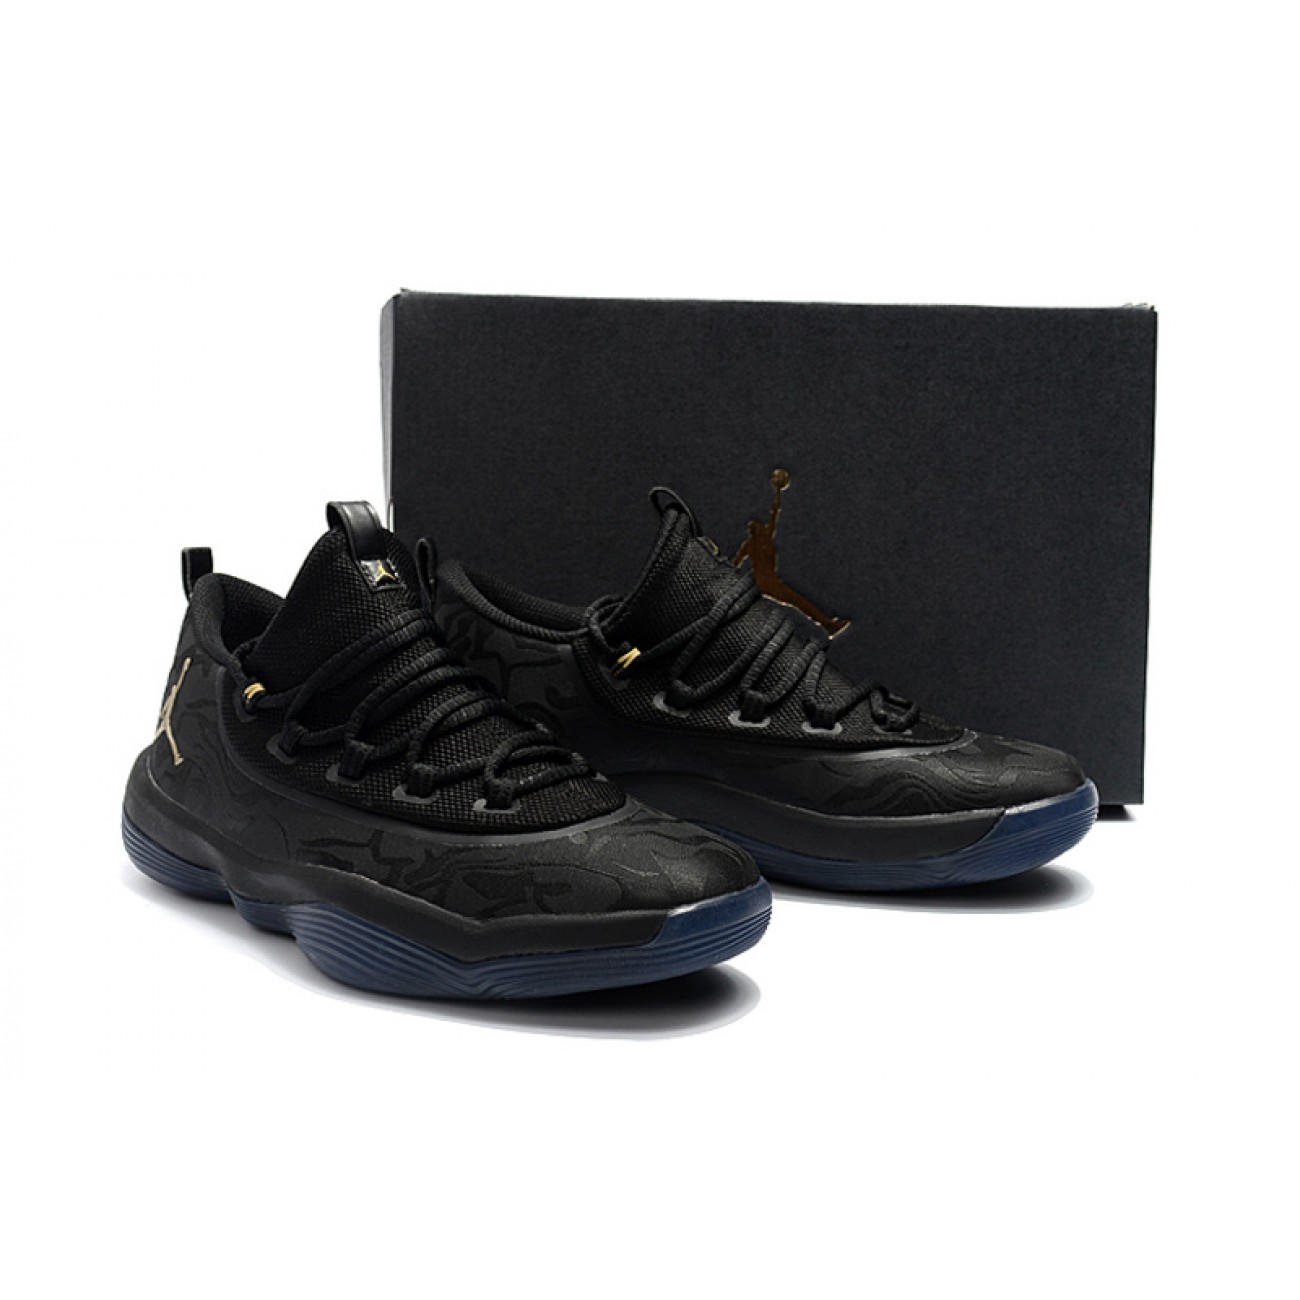 Air Jordan Super Fly Low Basketball Shoes Black/Gold